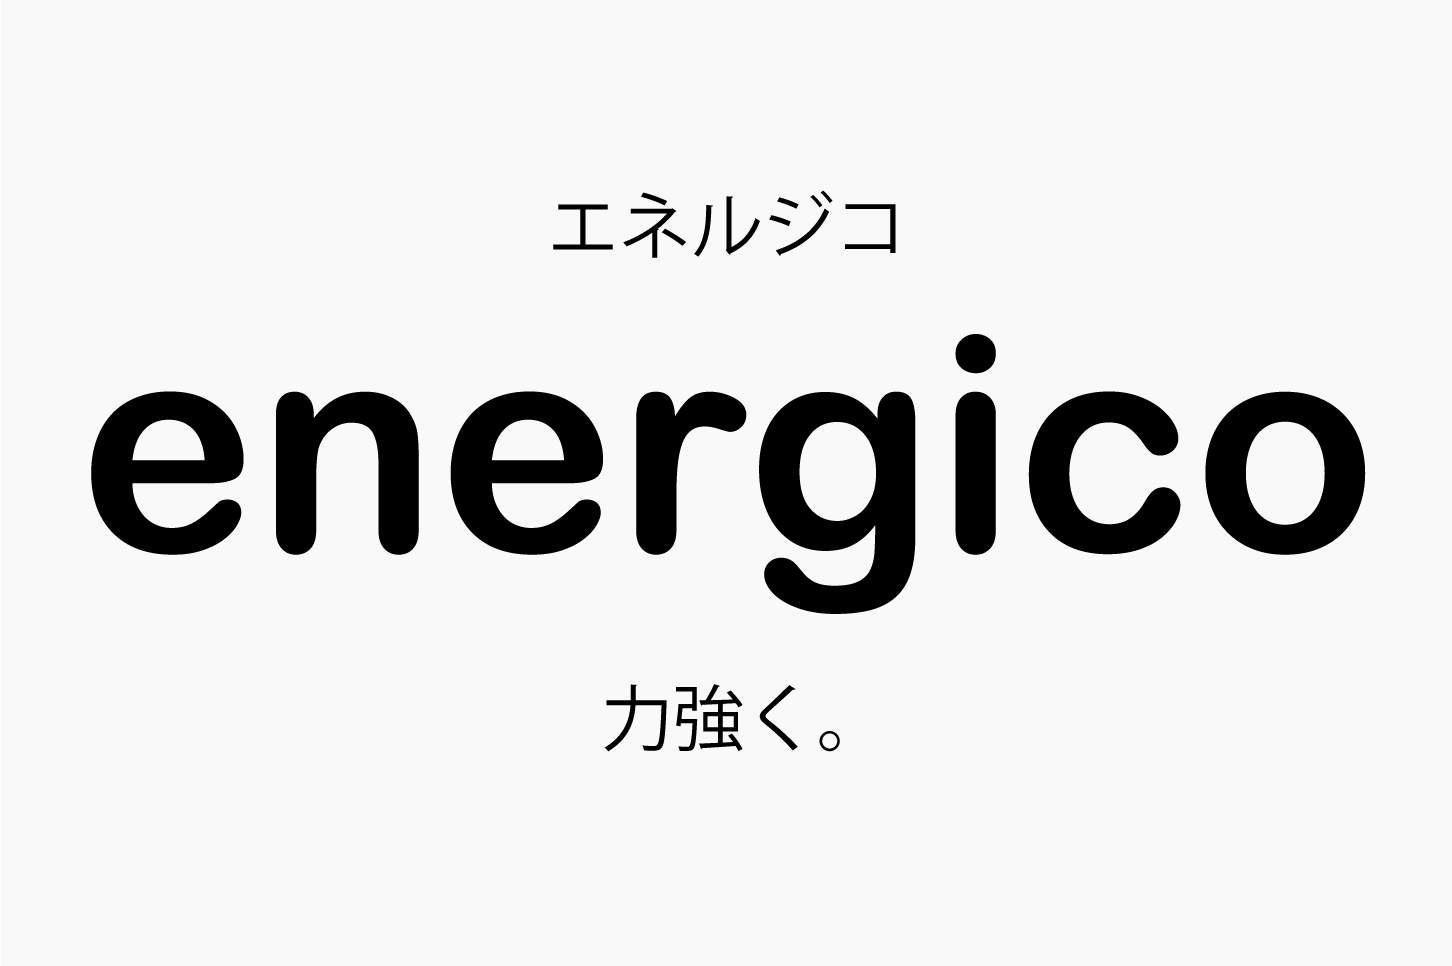 Energico エネルジコ の意味 音楽用語辞典